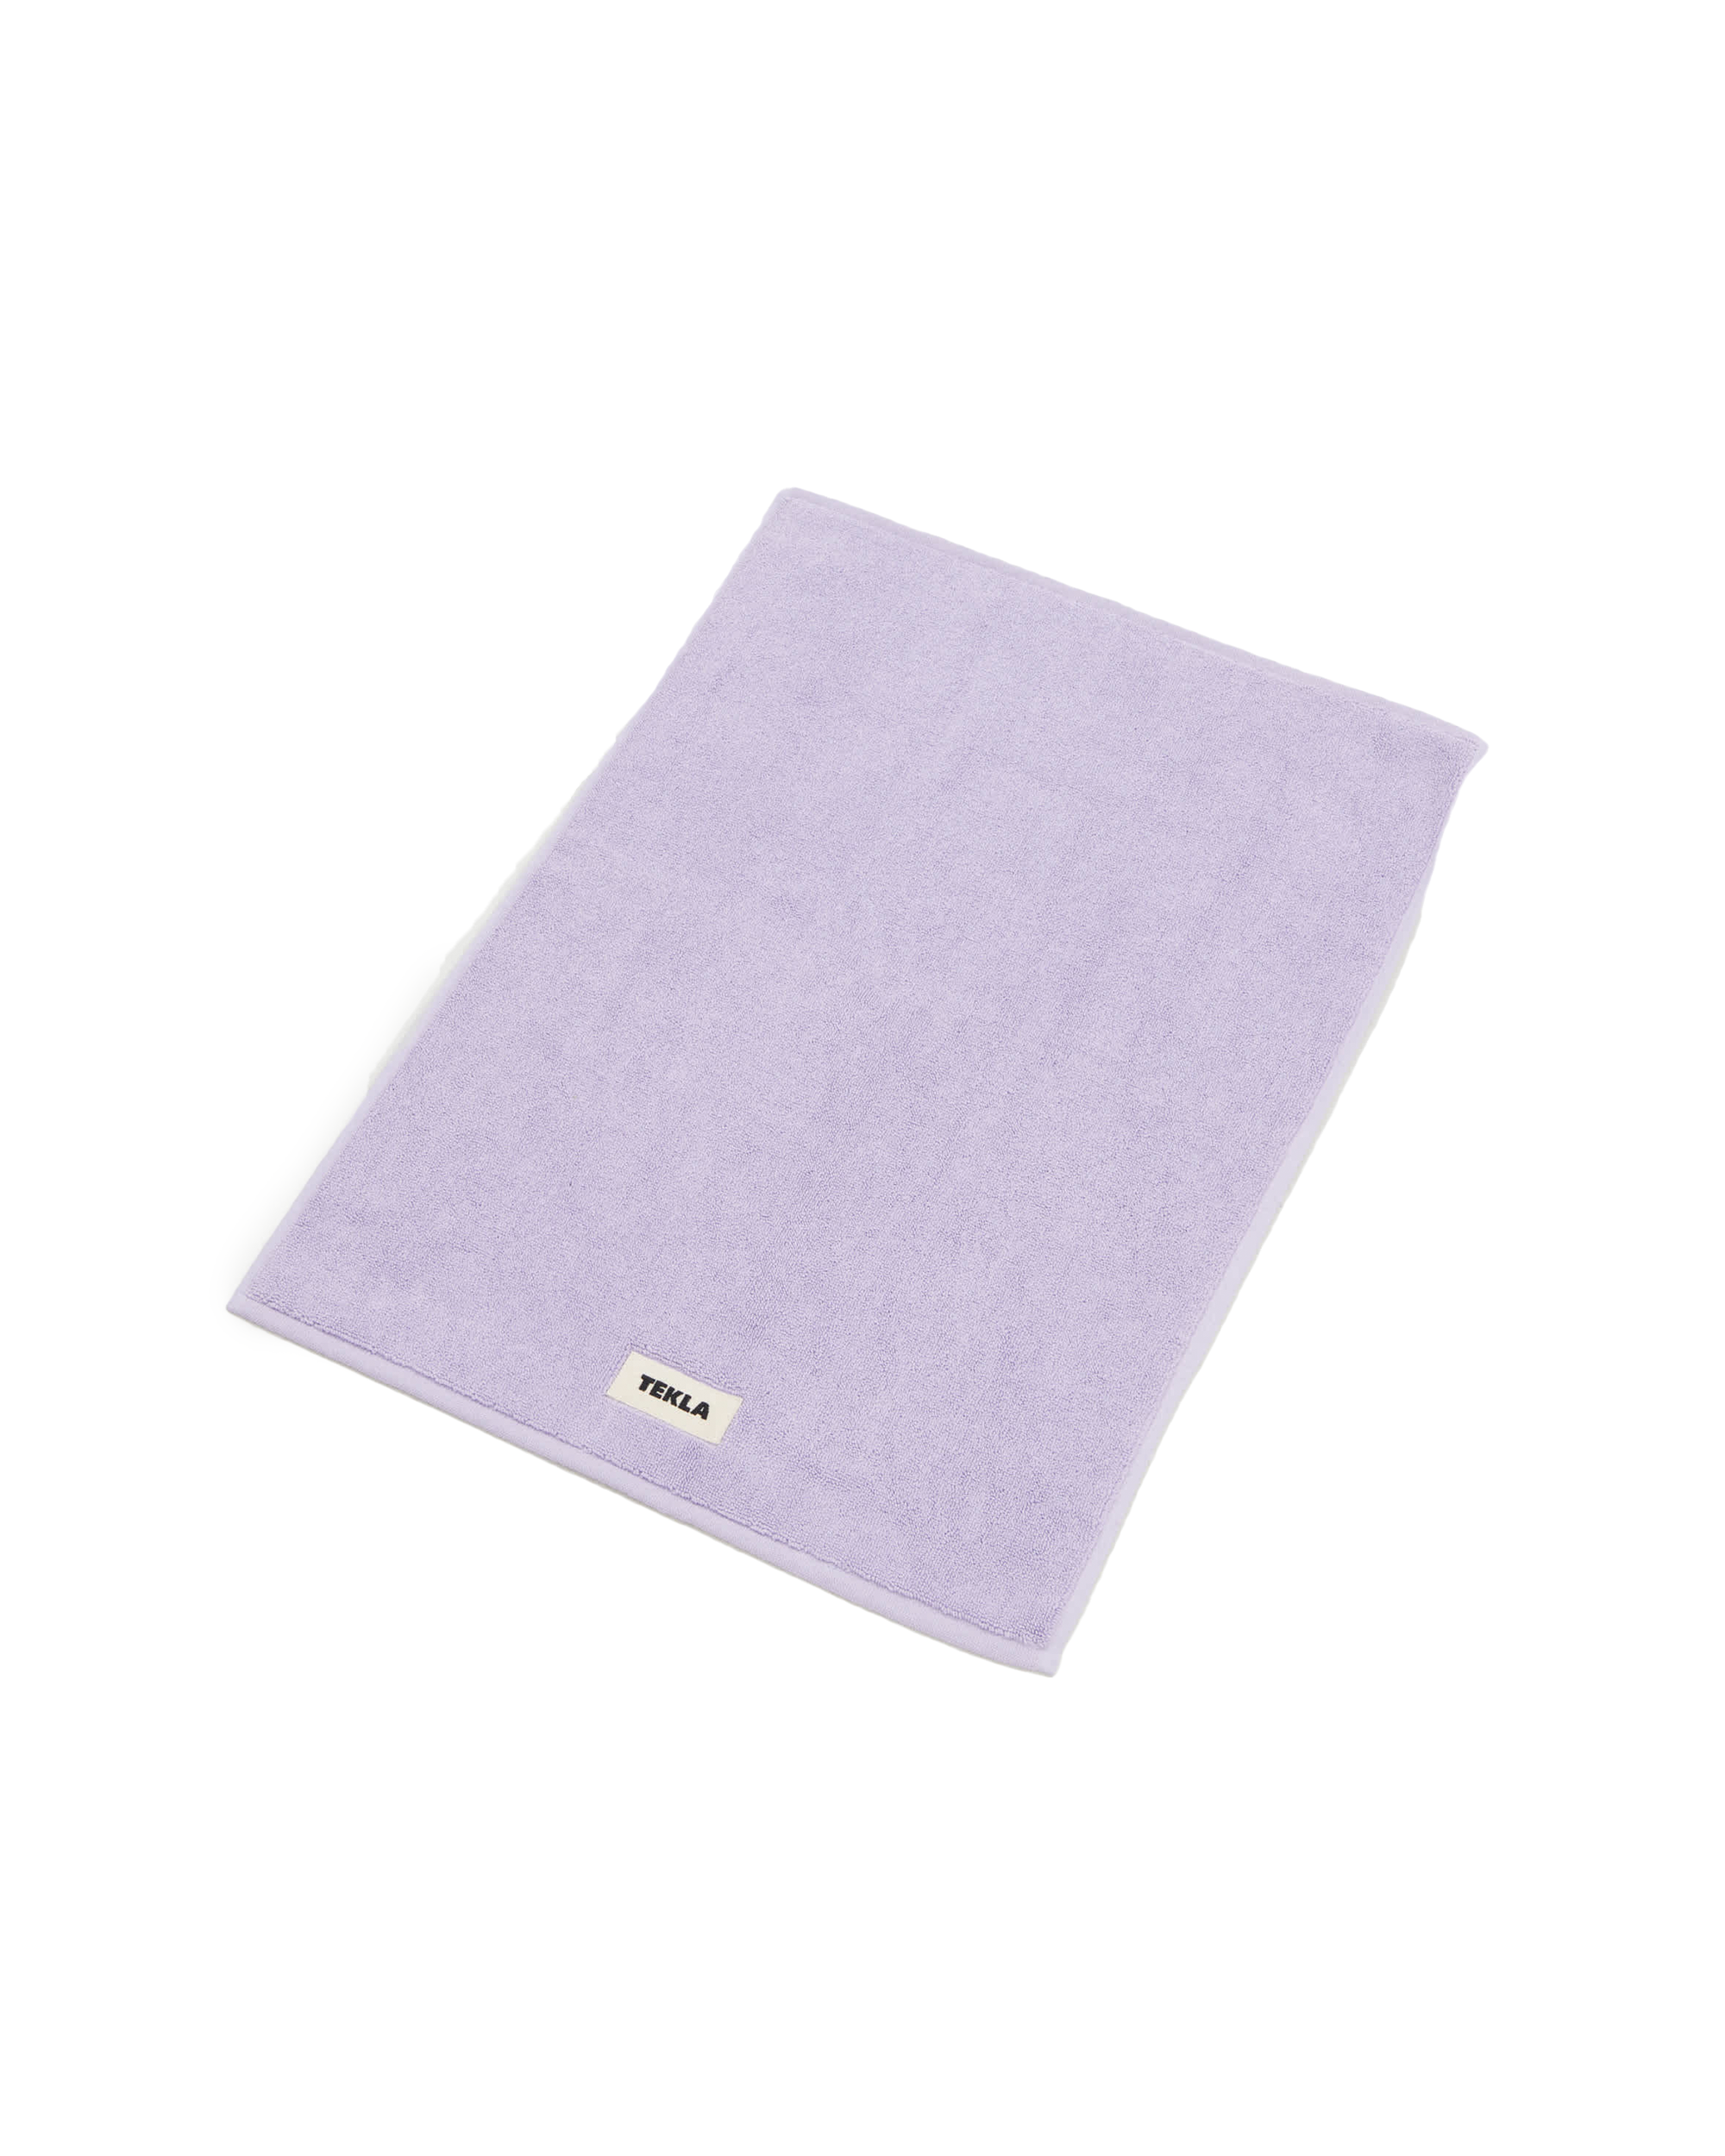 Bathmat (Solid) - Lavender